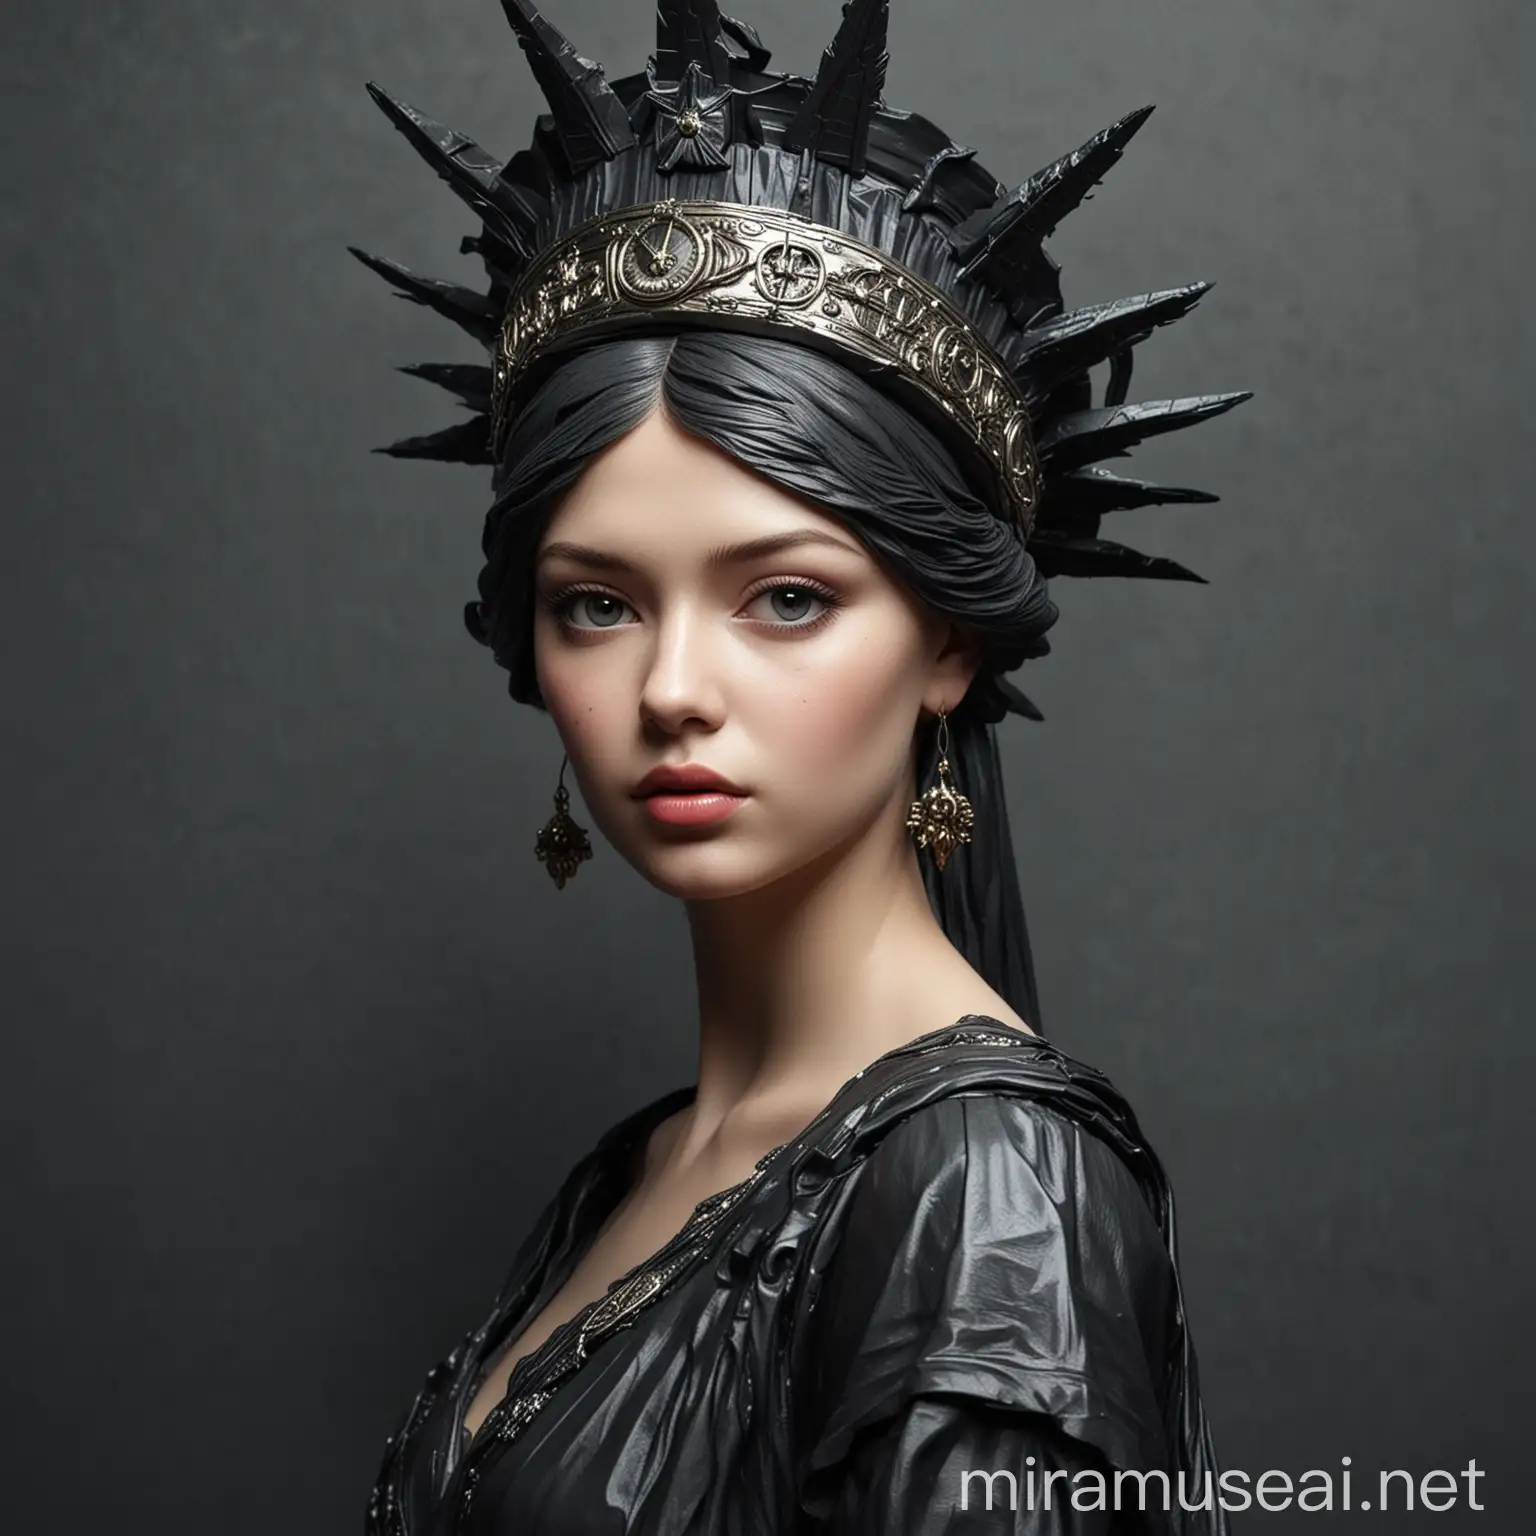 Elegant Woman in Statue of LibertyInspired Headwear on Black Background